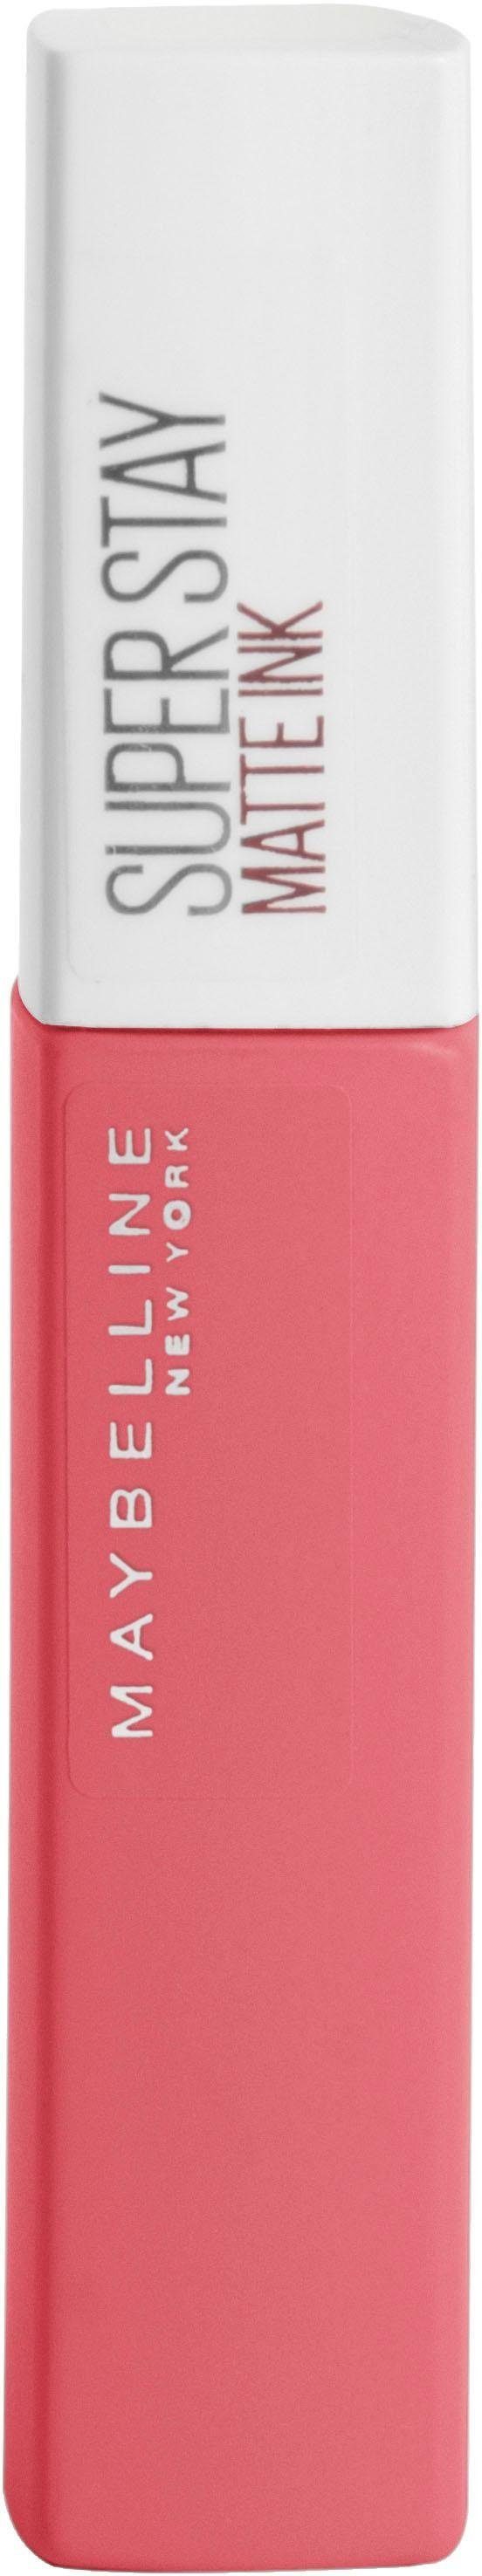 Super NEW YORK Lippenstift Pinks MAYBELLINE Nr.155 Matte Stay savant Ink